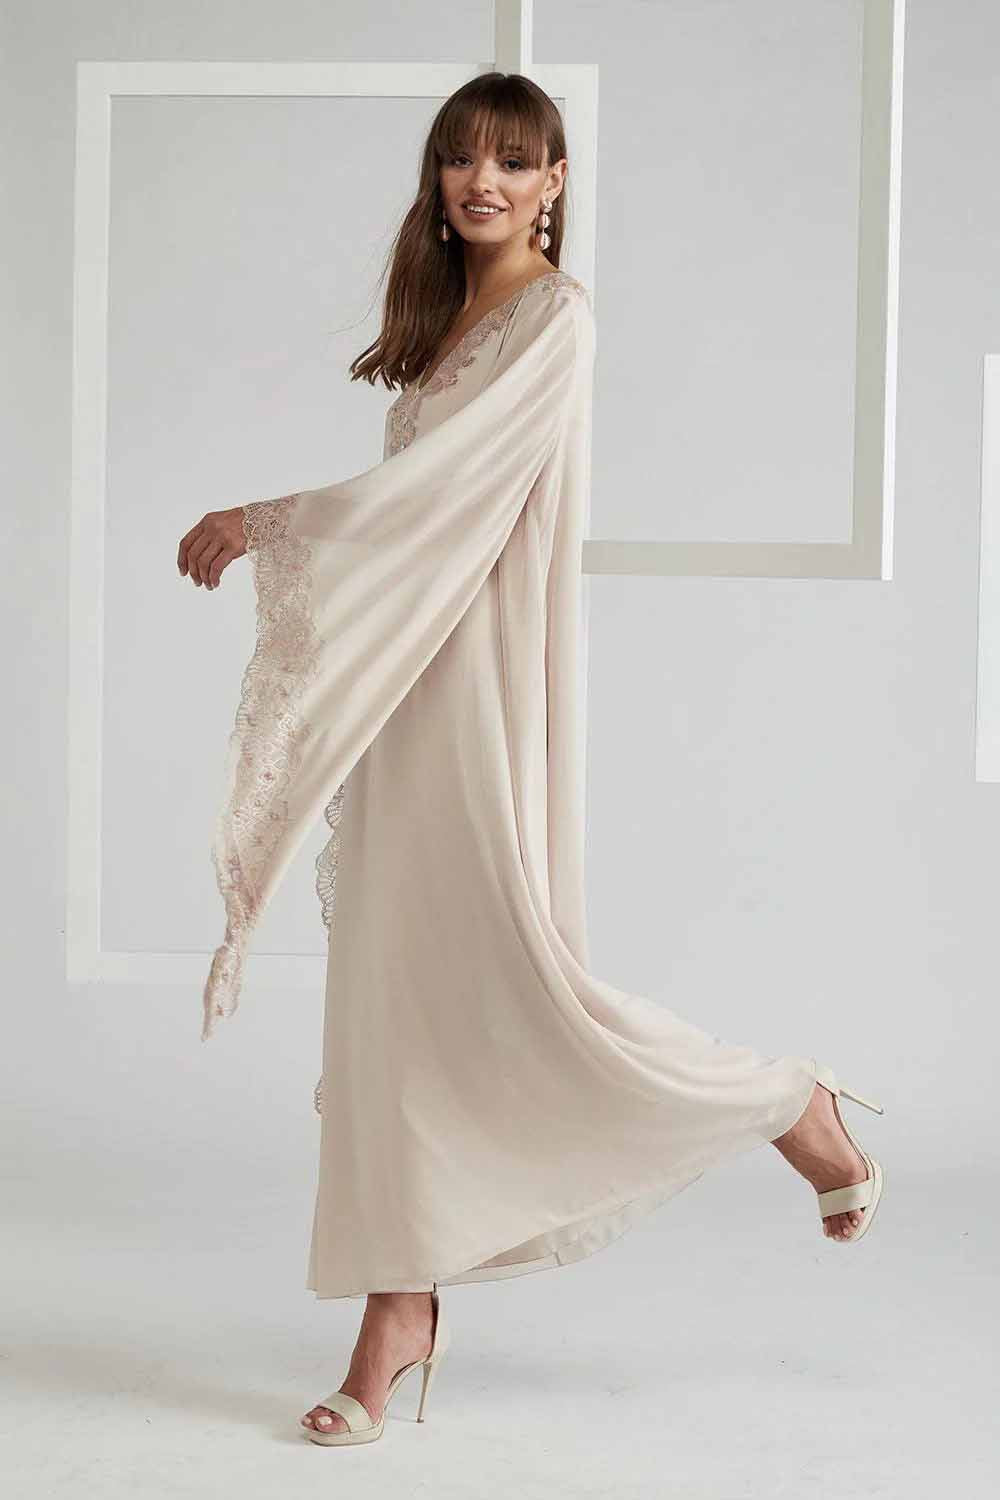 Silky Chiffon Dress Triangular Sleeve Beige - Nude